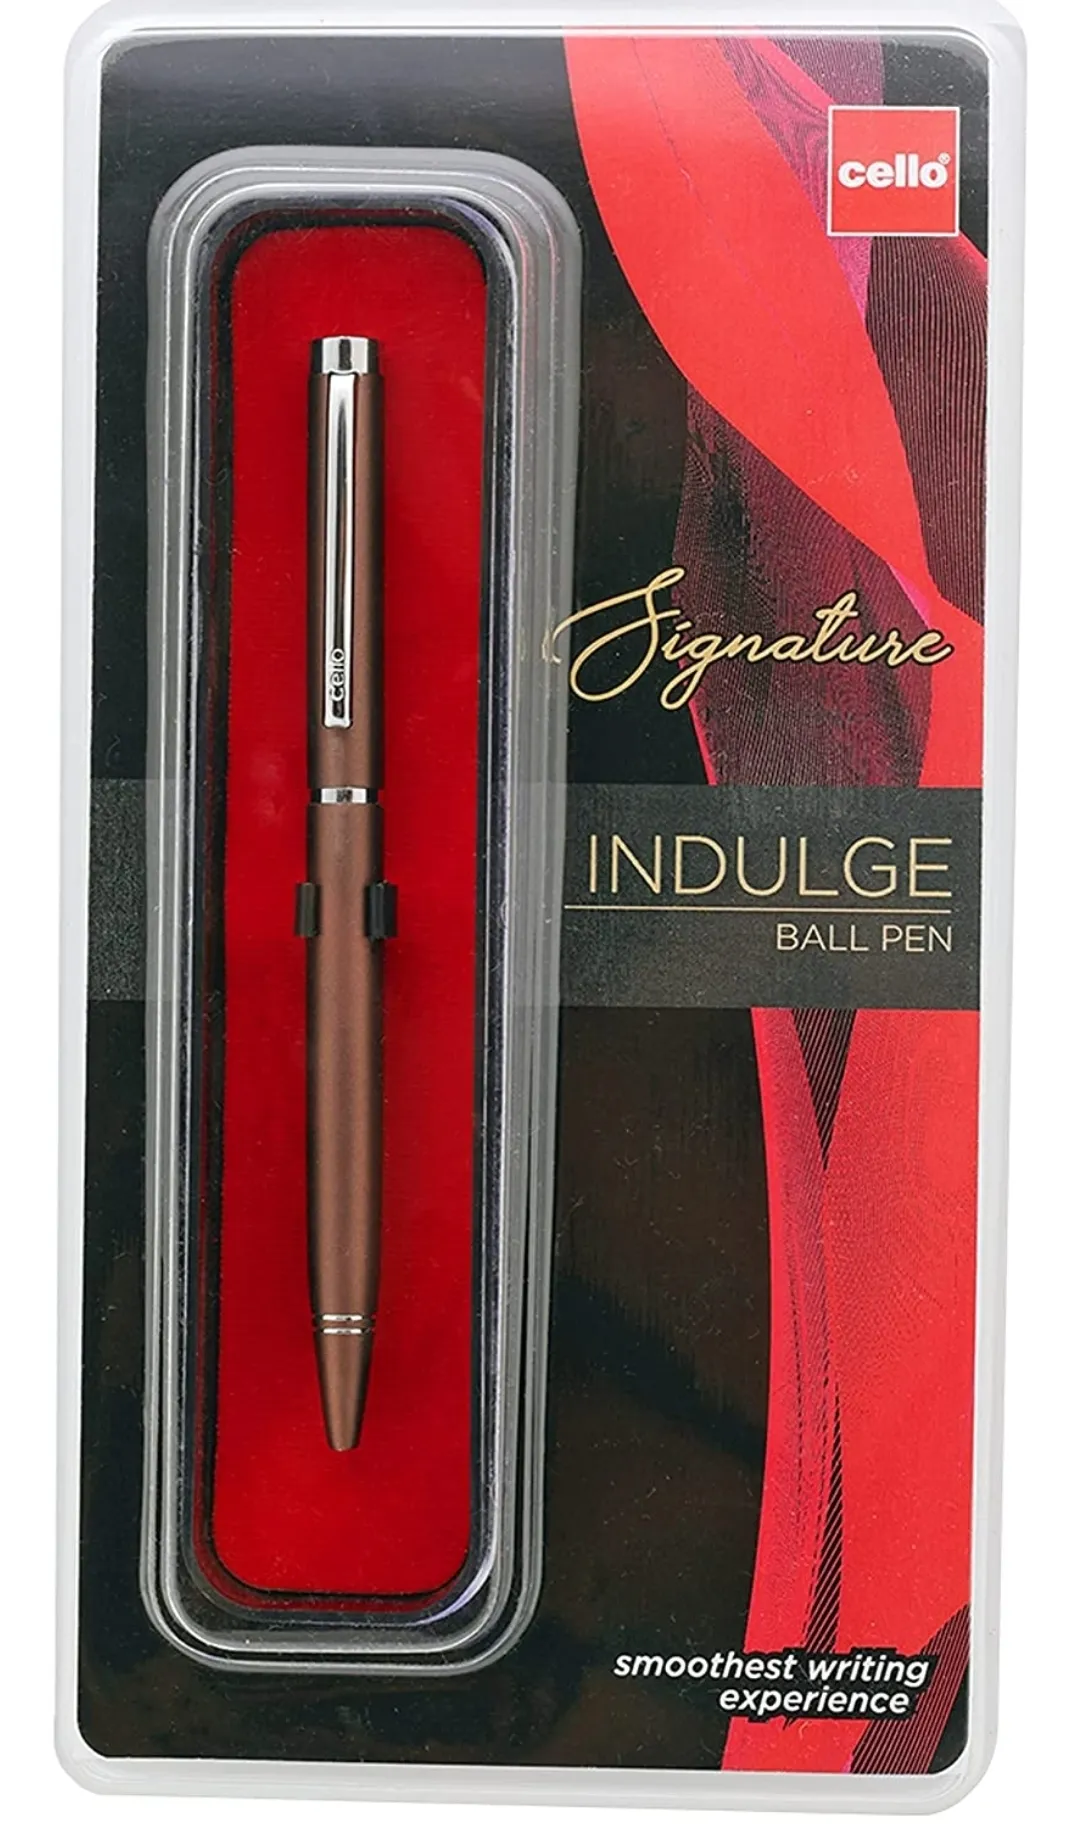 Cello Signature Indulge Ball Pen Blue Pen 0.7 mm Gift Pack of 1 Pen